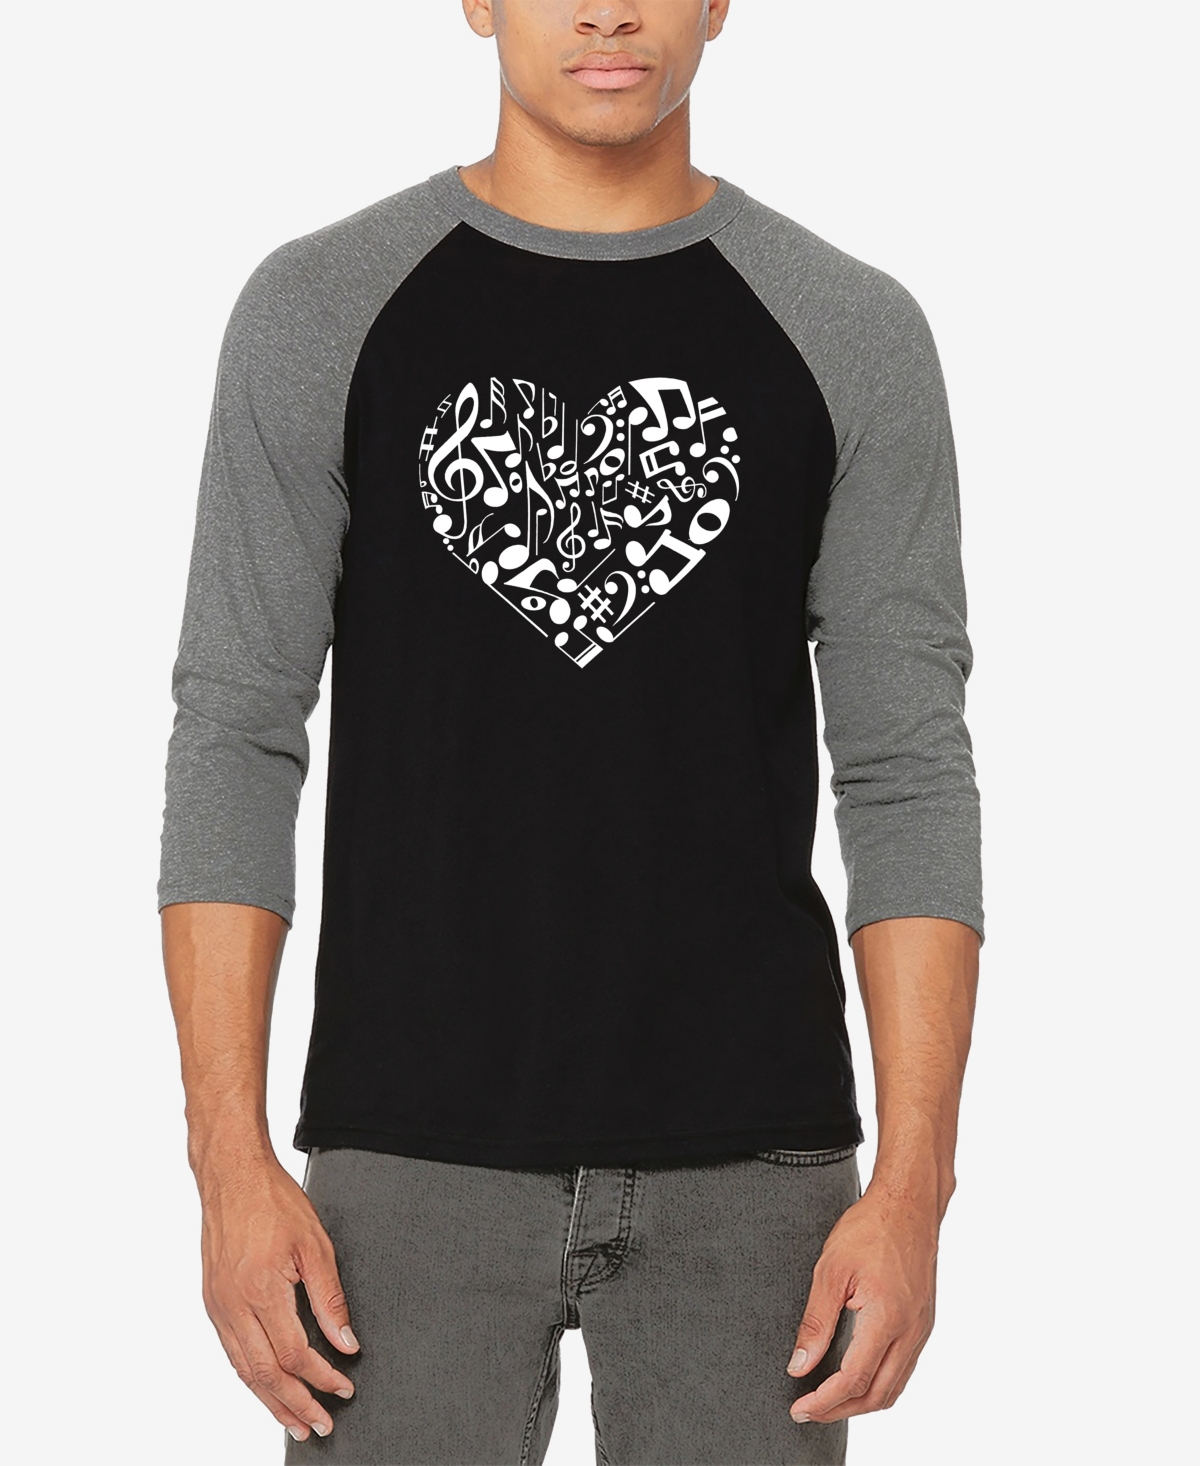 Men's Raglan Baseball Word Art Heart Notes T-shirt - Gray and Black